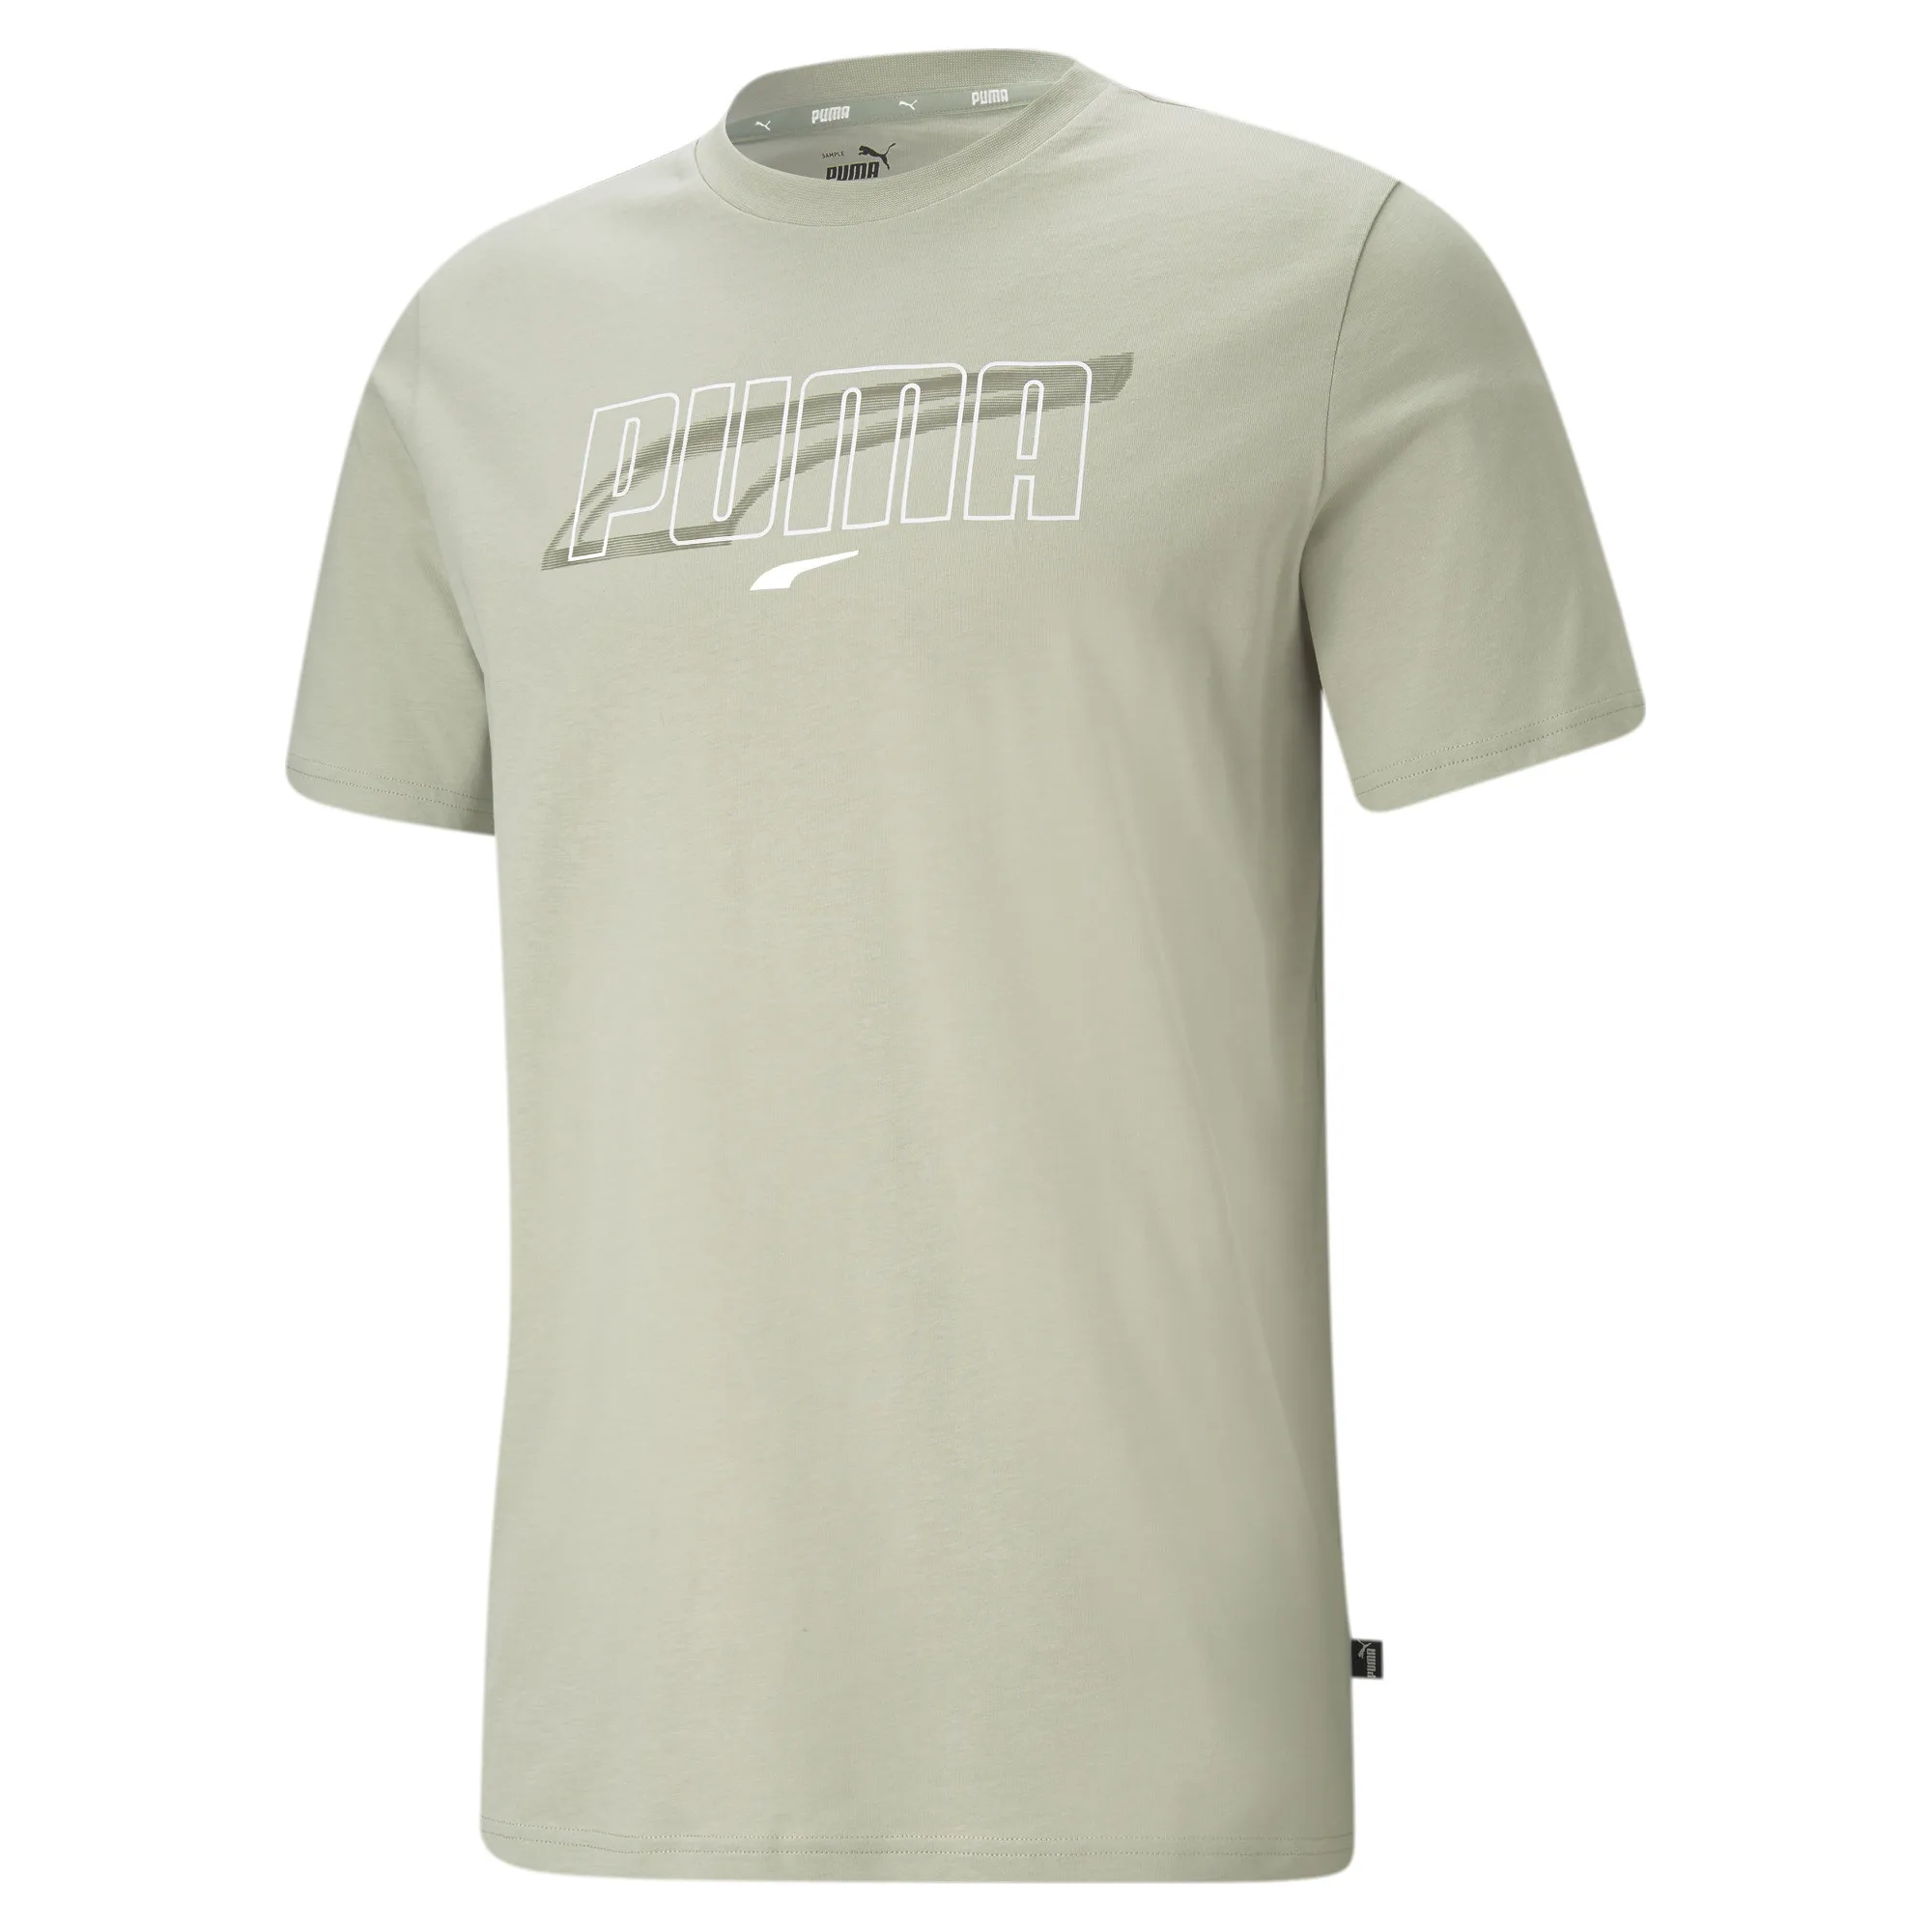 Men's t-shirt PUMA Rebel Tee T-shirts Top short sleeve male clothing for  sport пума cougar Puma puma - AliExpress Men's Clothing